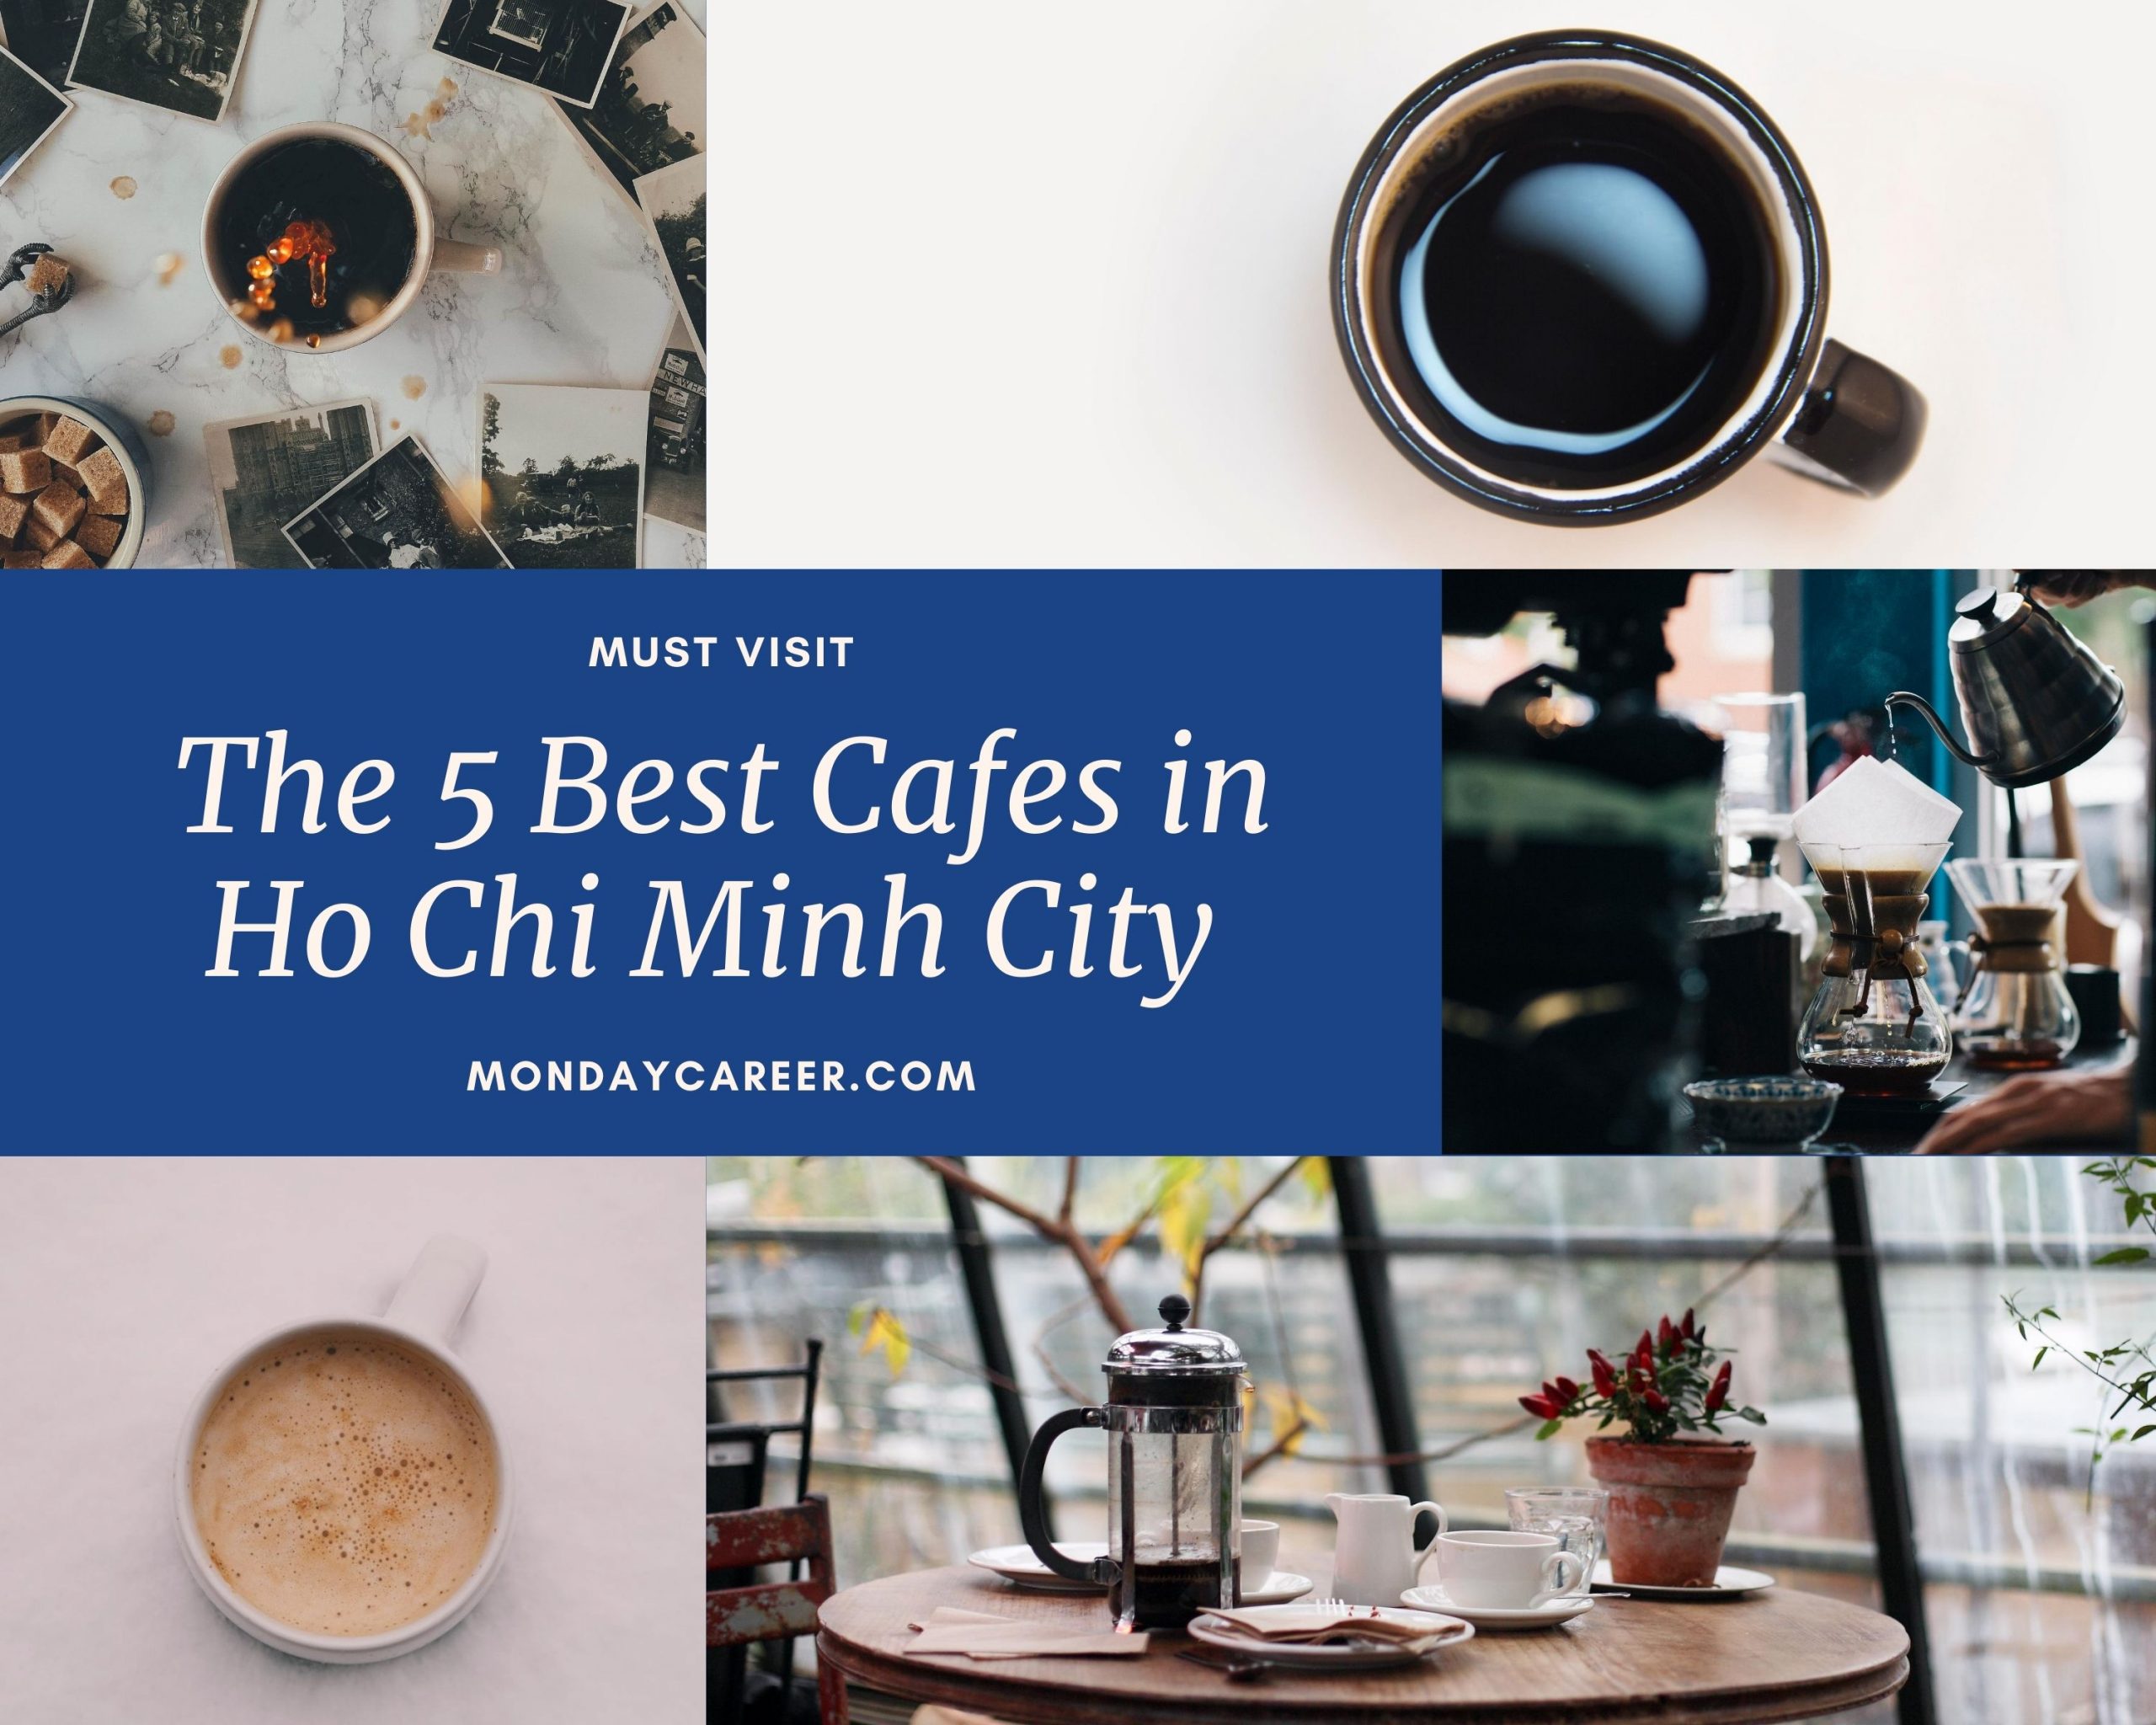 The 5 Best Cafe Shops In Ho Chi Minh City - Must Visit! | Cafe